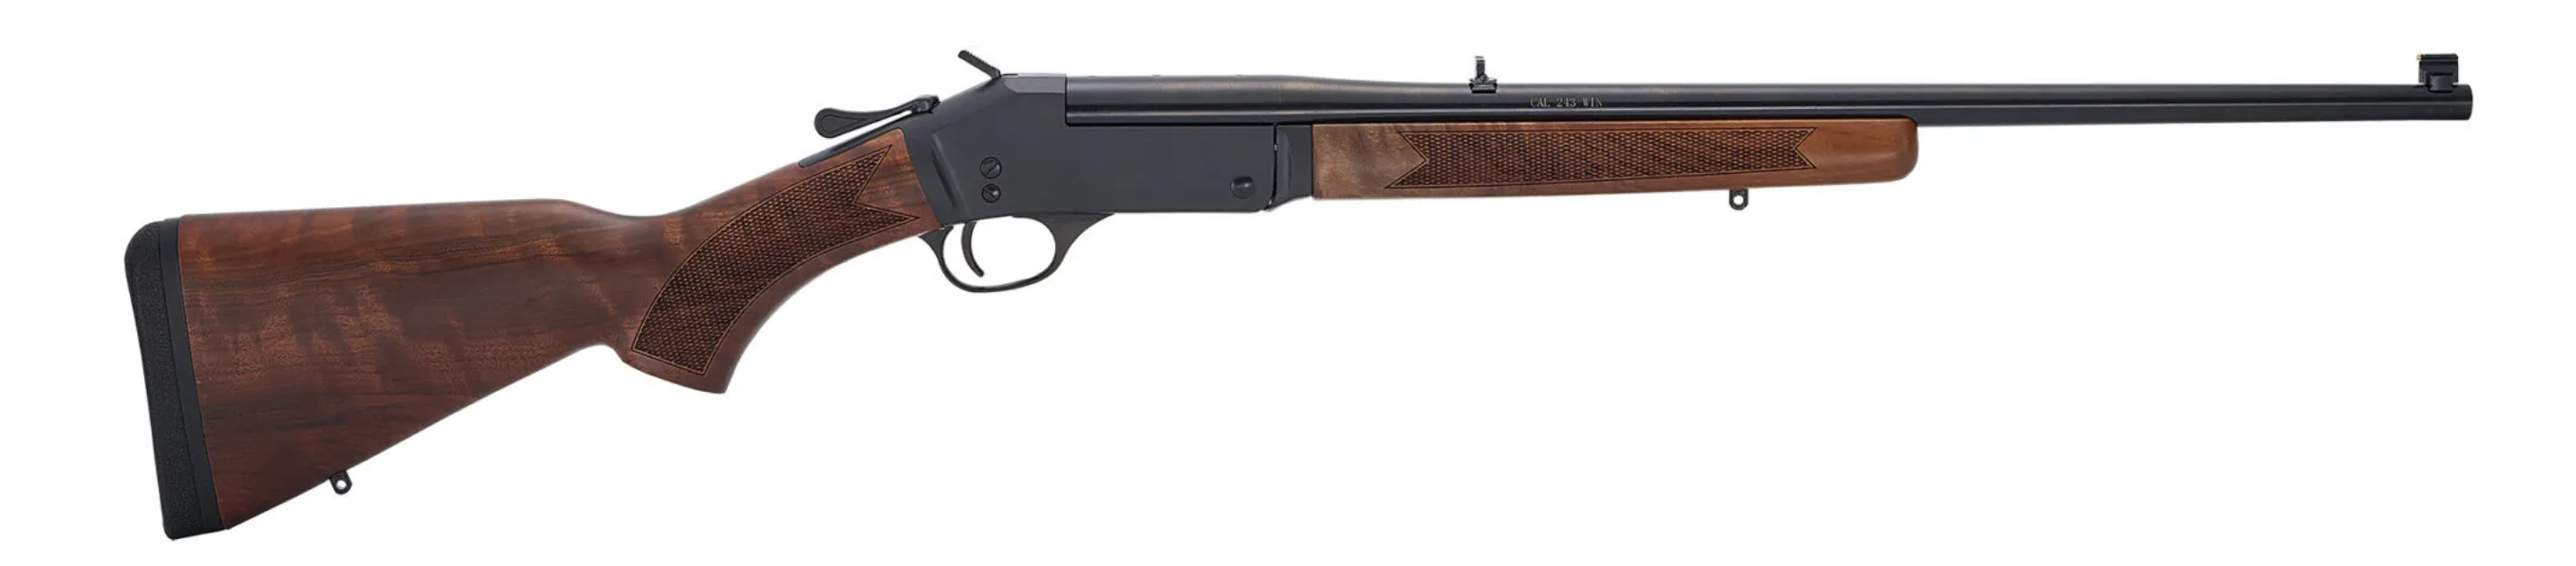 Henry Rifles single shot youth hunting rifle